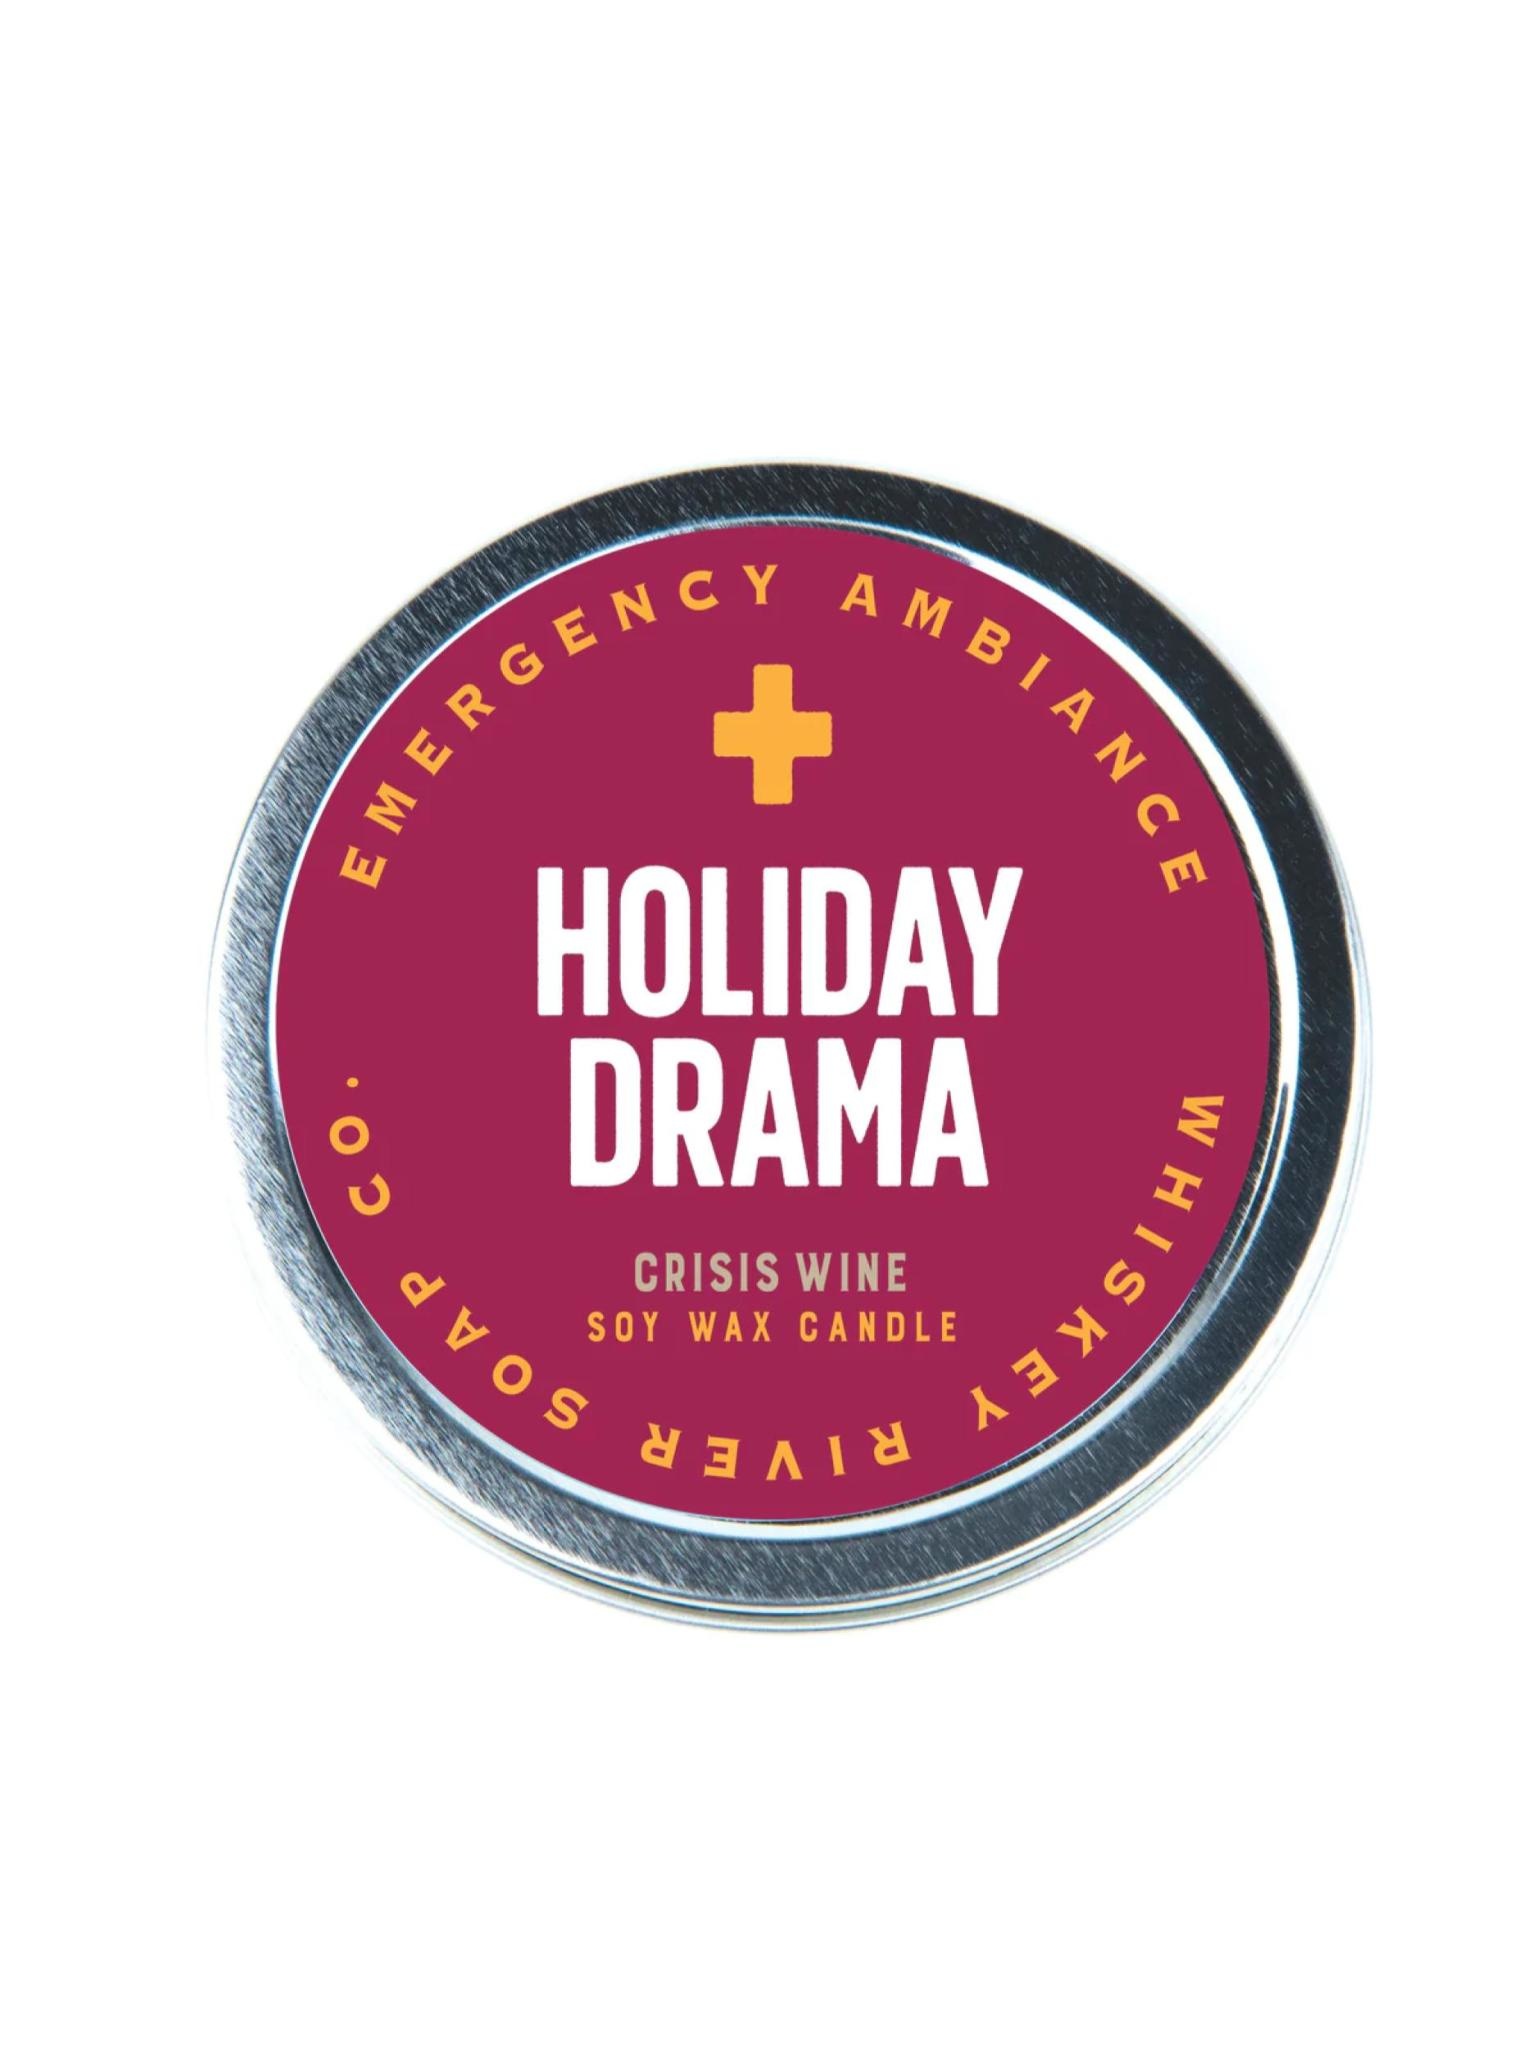 Whiskey River Soap Co. Holiday Drama Emergency Ambiance Tin